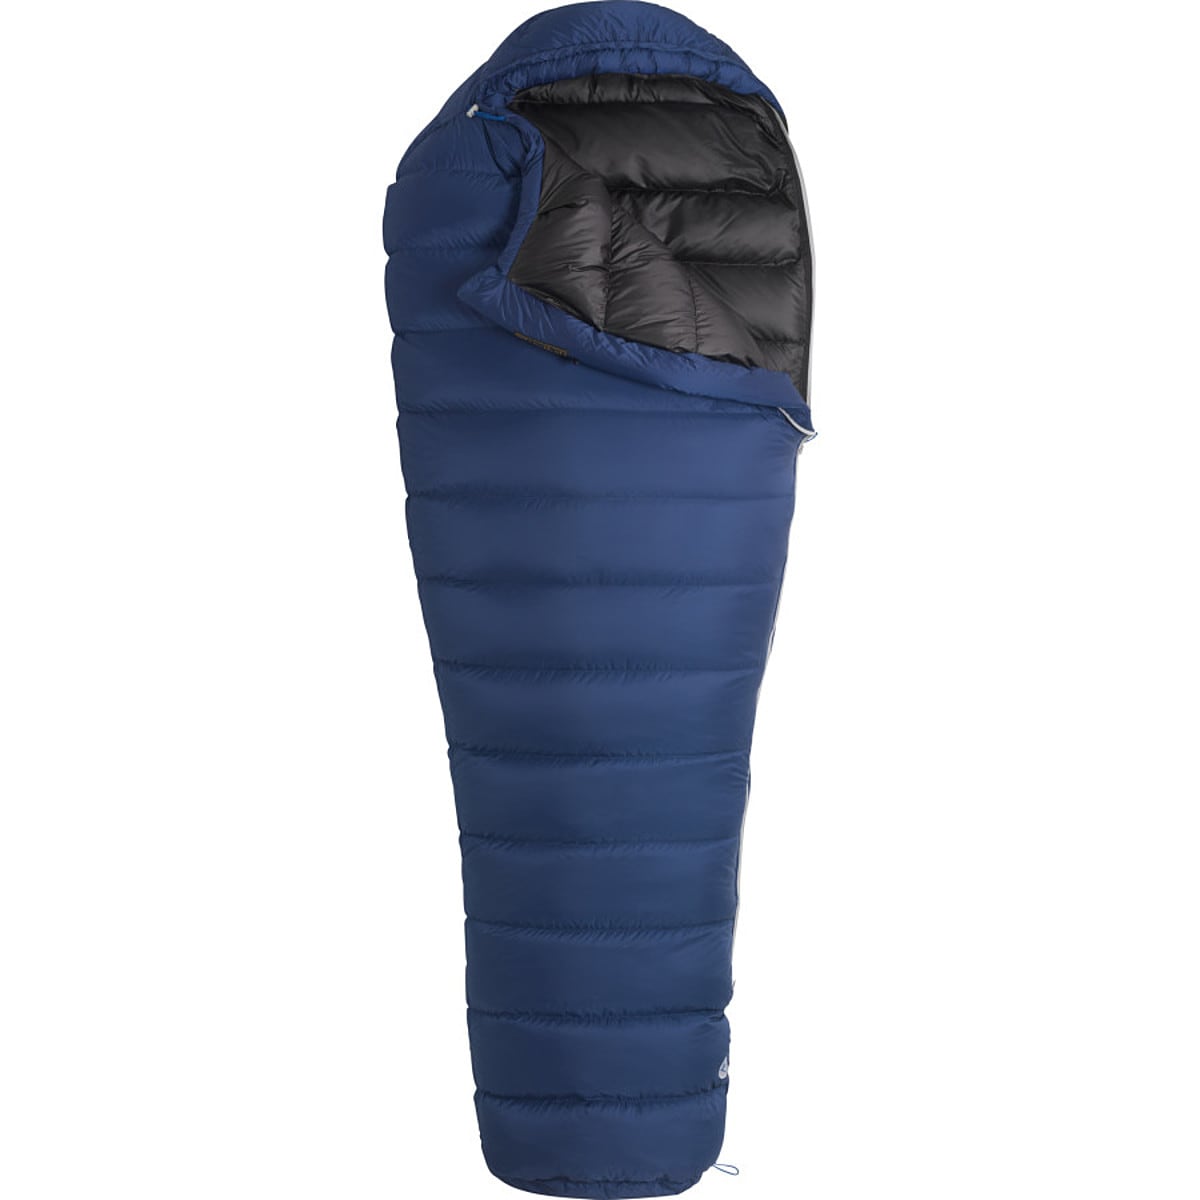 Marmot Helium MemBrain Sleeping Bag: 15F Down - Hike & Camp